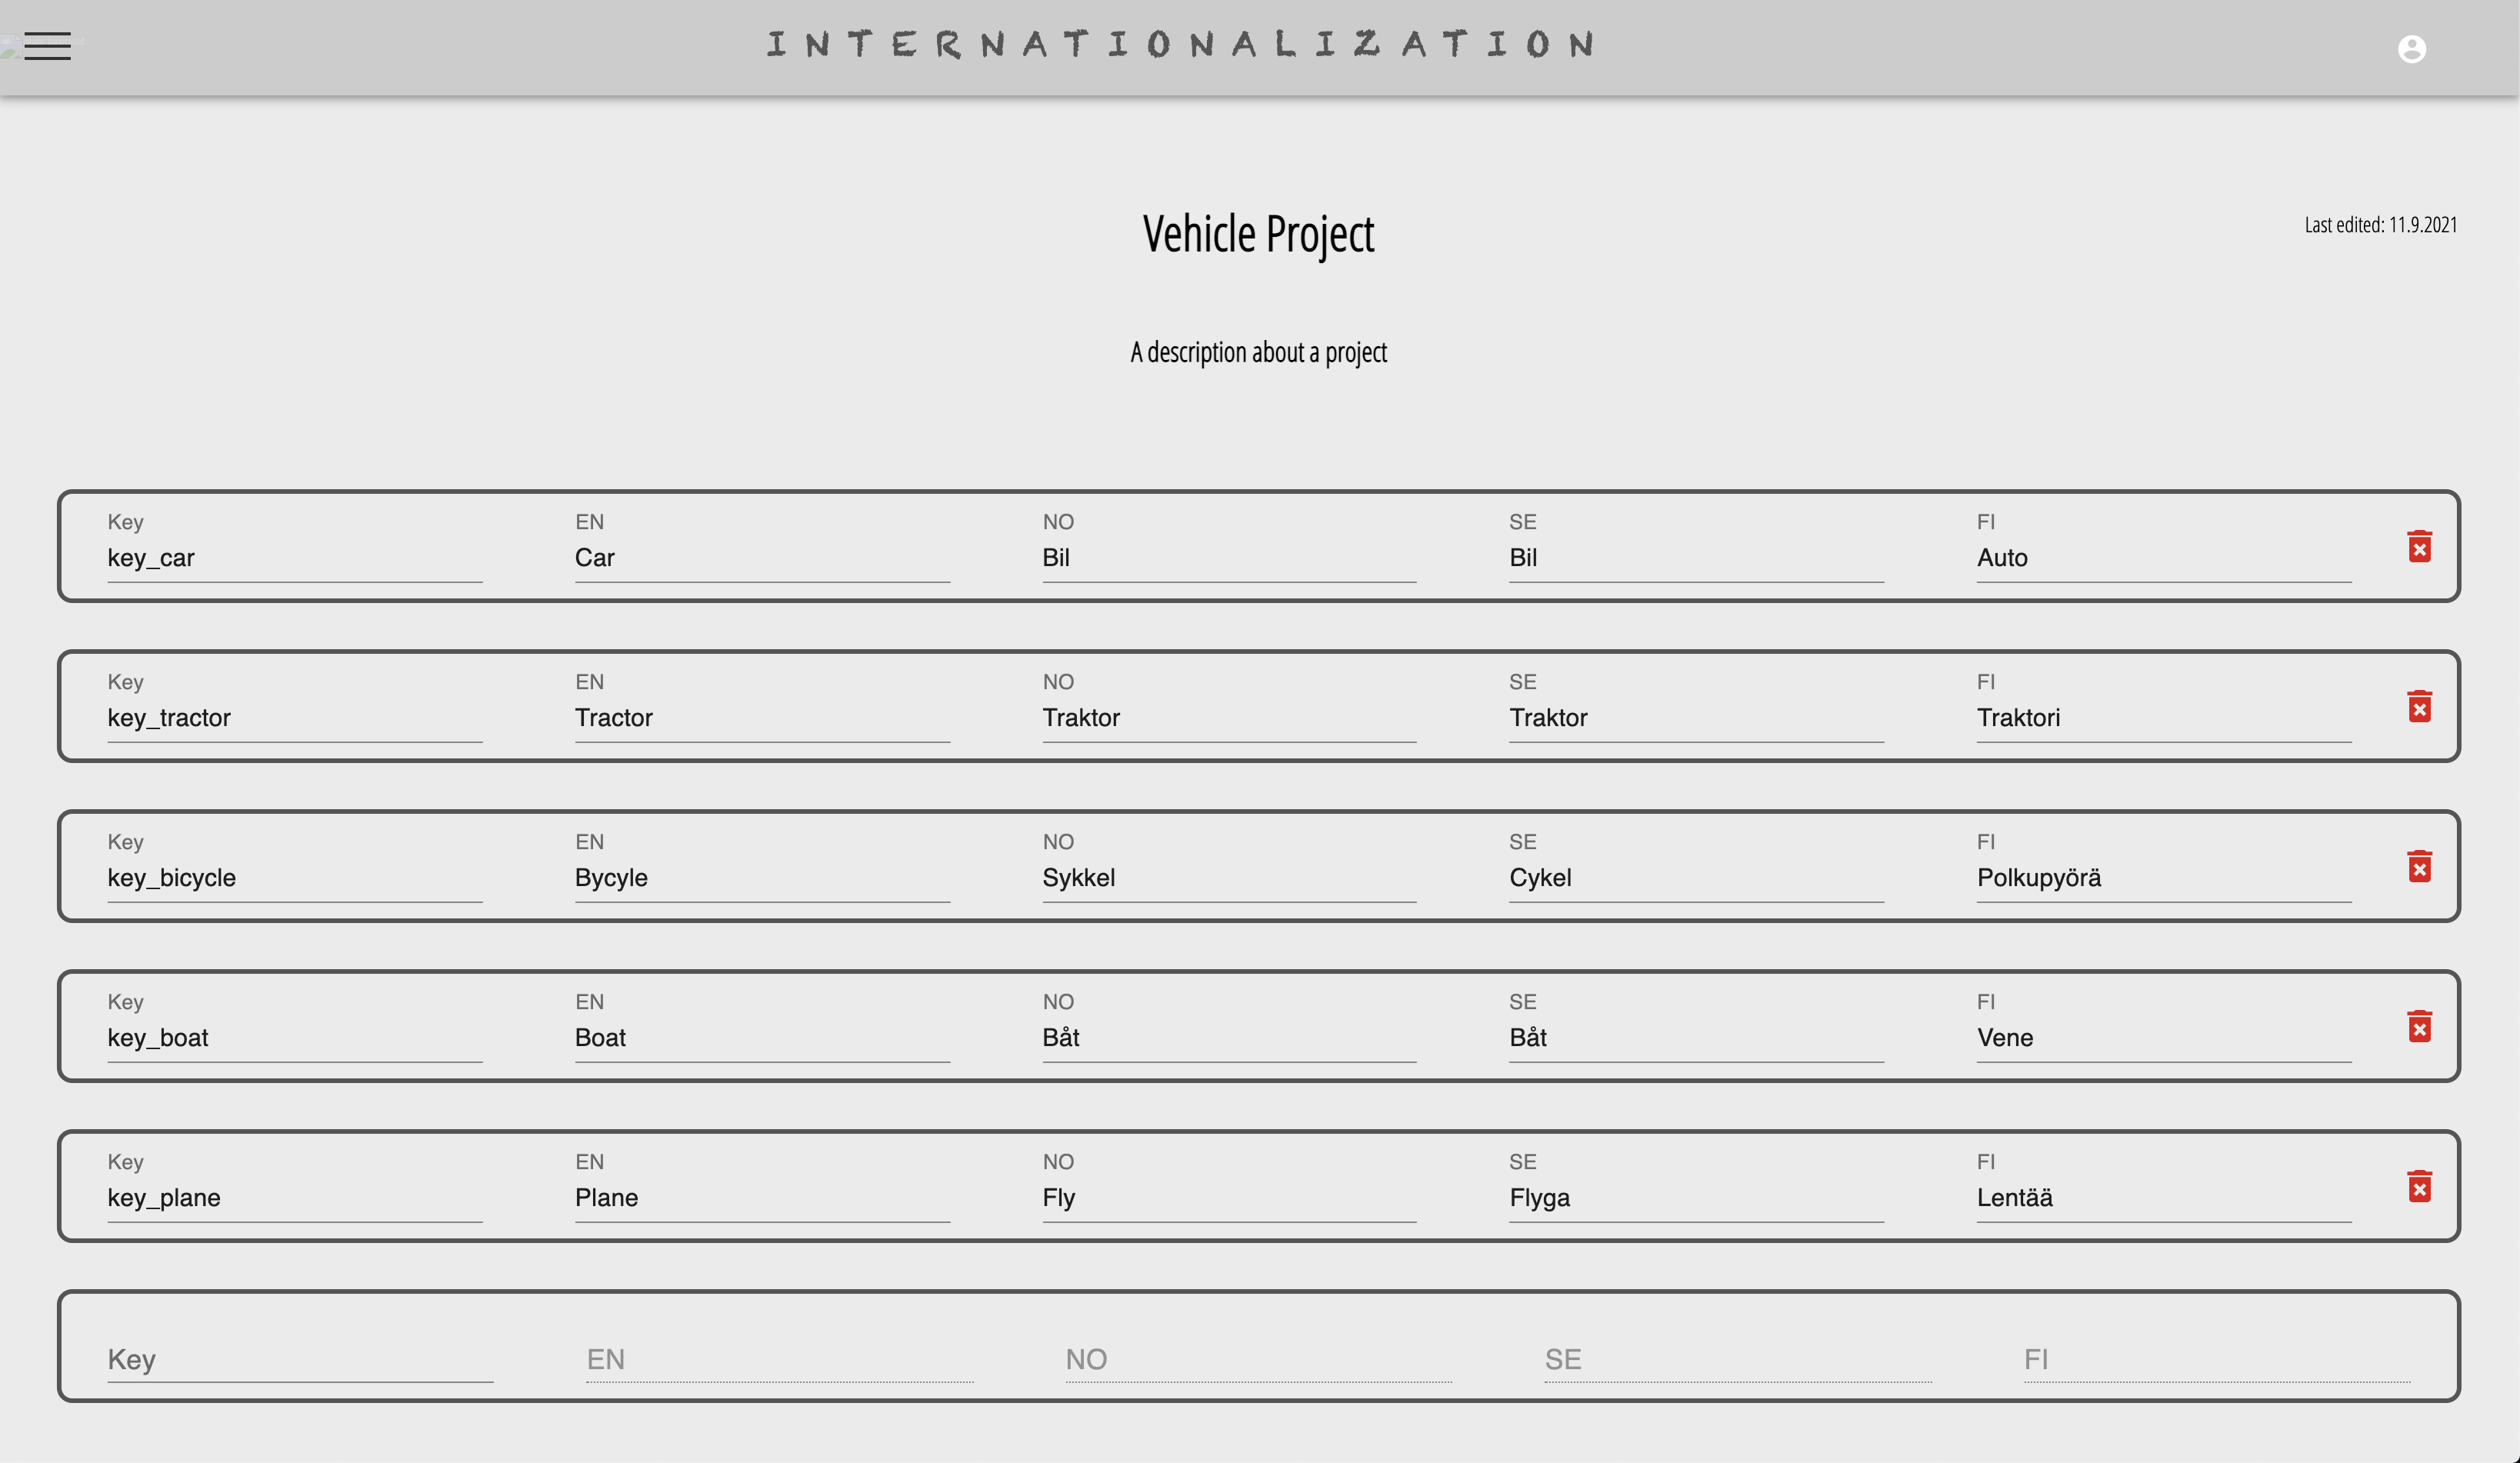 Screeenshot of the internationalization website